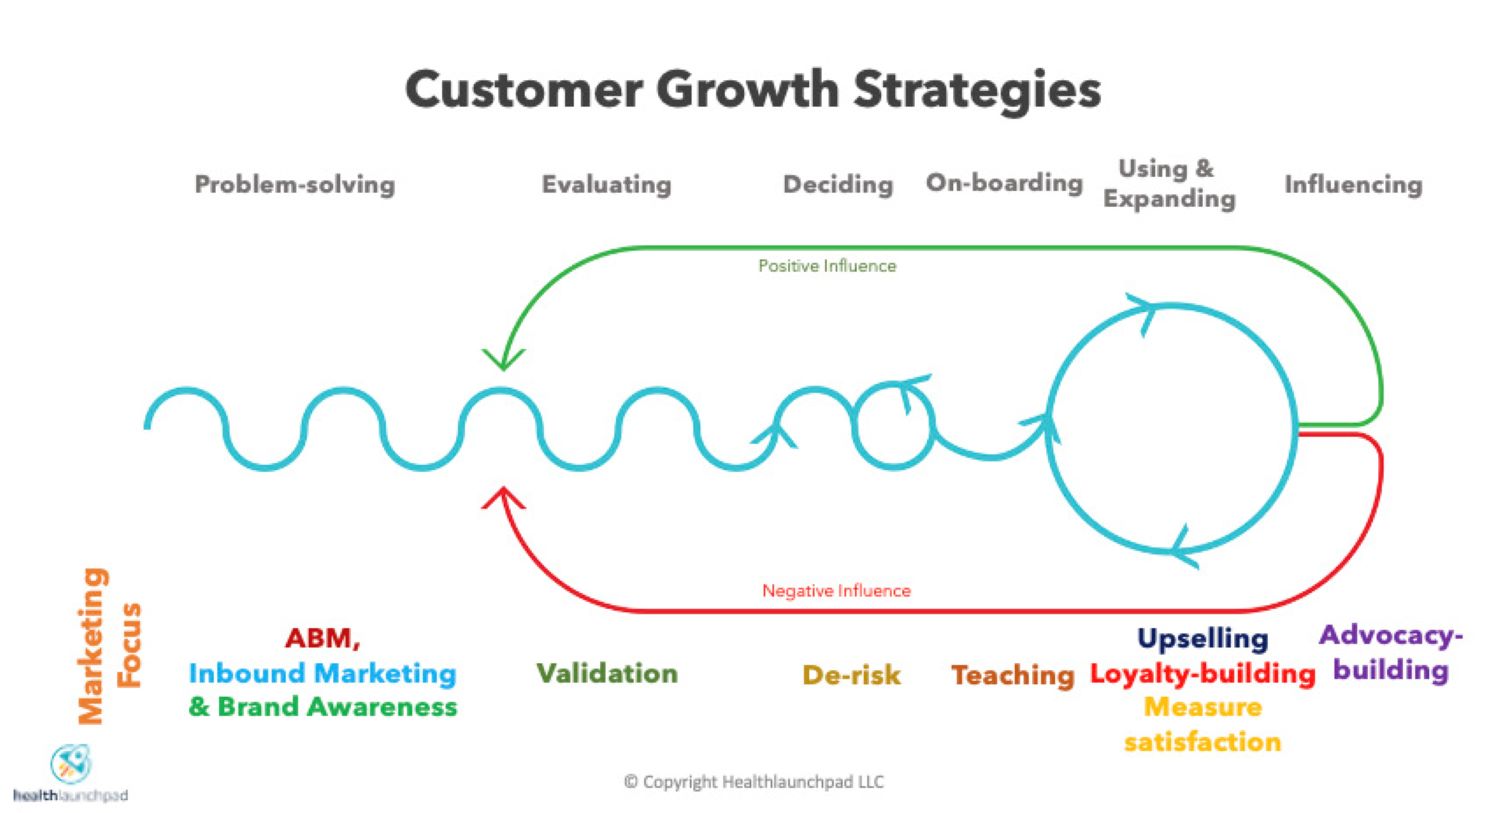 5 giai đoạn growth marketing framework: Problem-solving, Evaluating, Deciding, On-boarding, Using & Expanding, Influencing